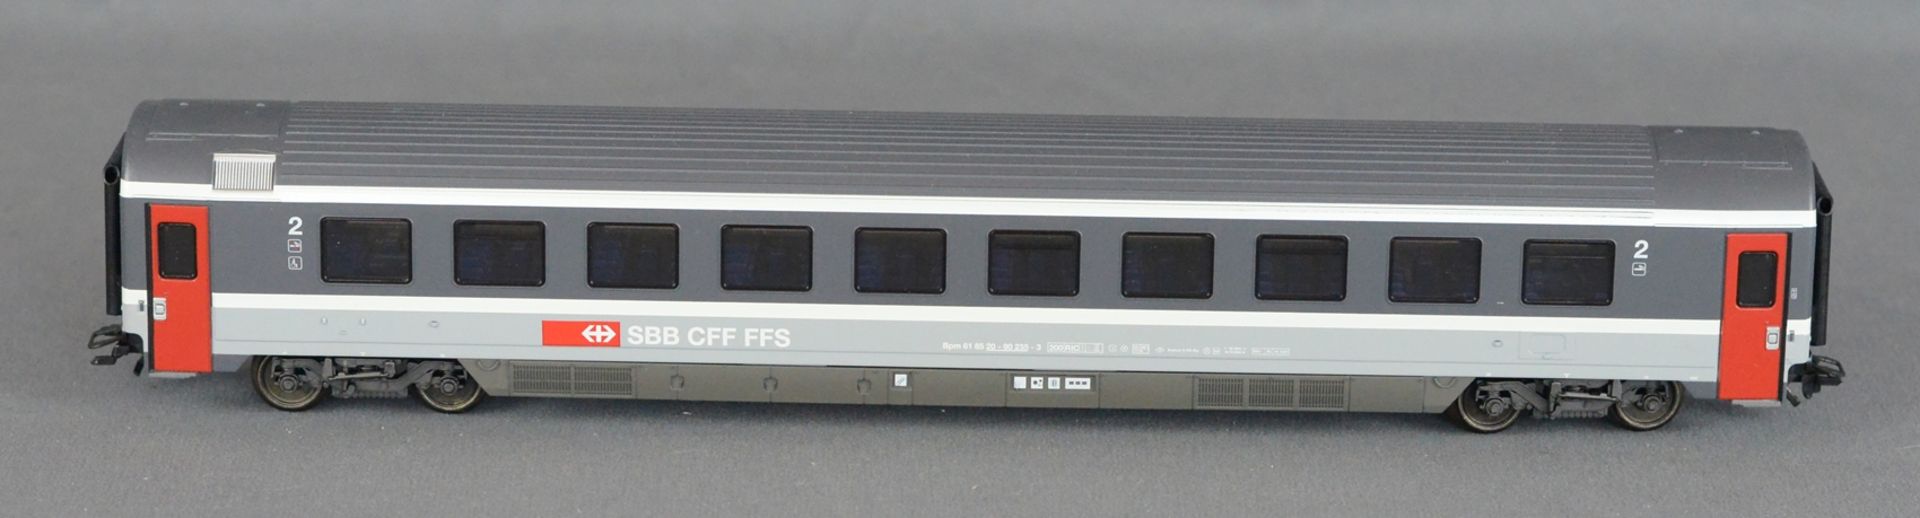 Märklin H0 4367 Wagenset Eurocity SBB, unbespielt und in OriginalverpackungMärklin H0 4367 wagon set - Image 5 of 6